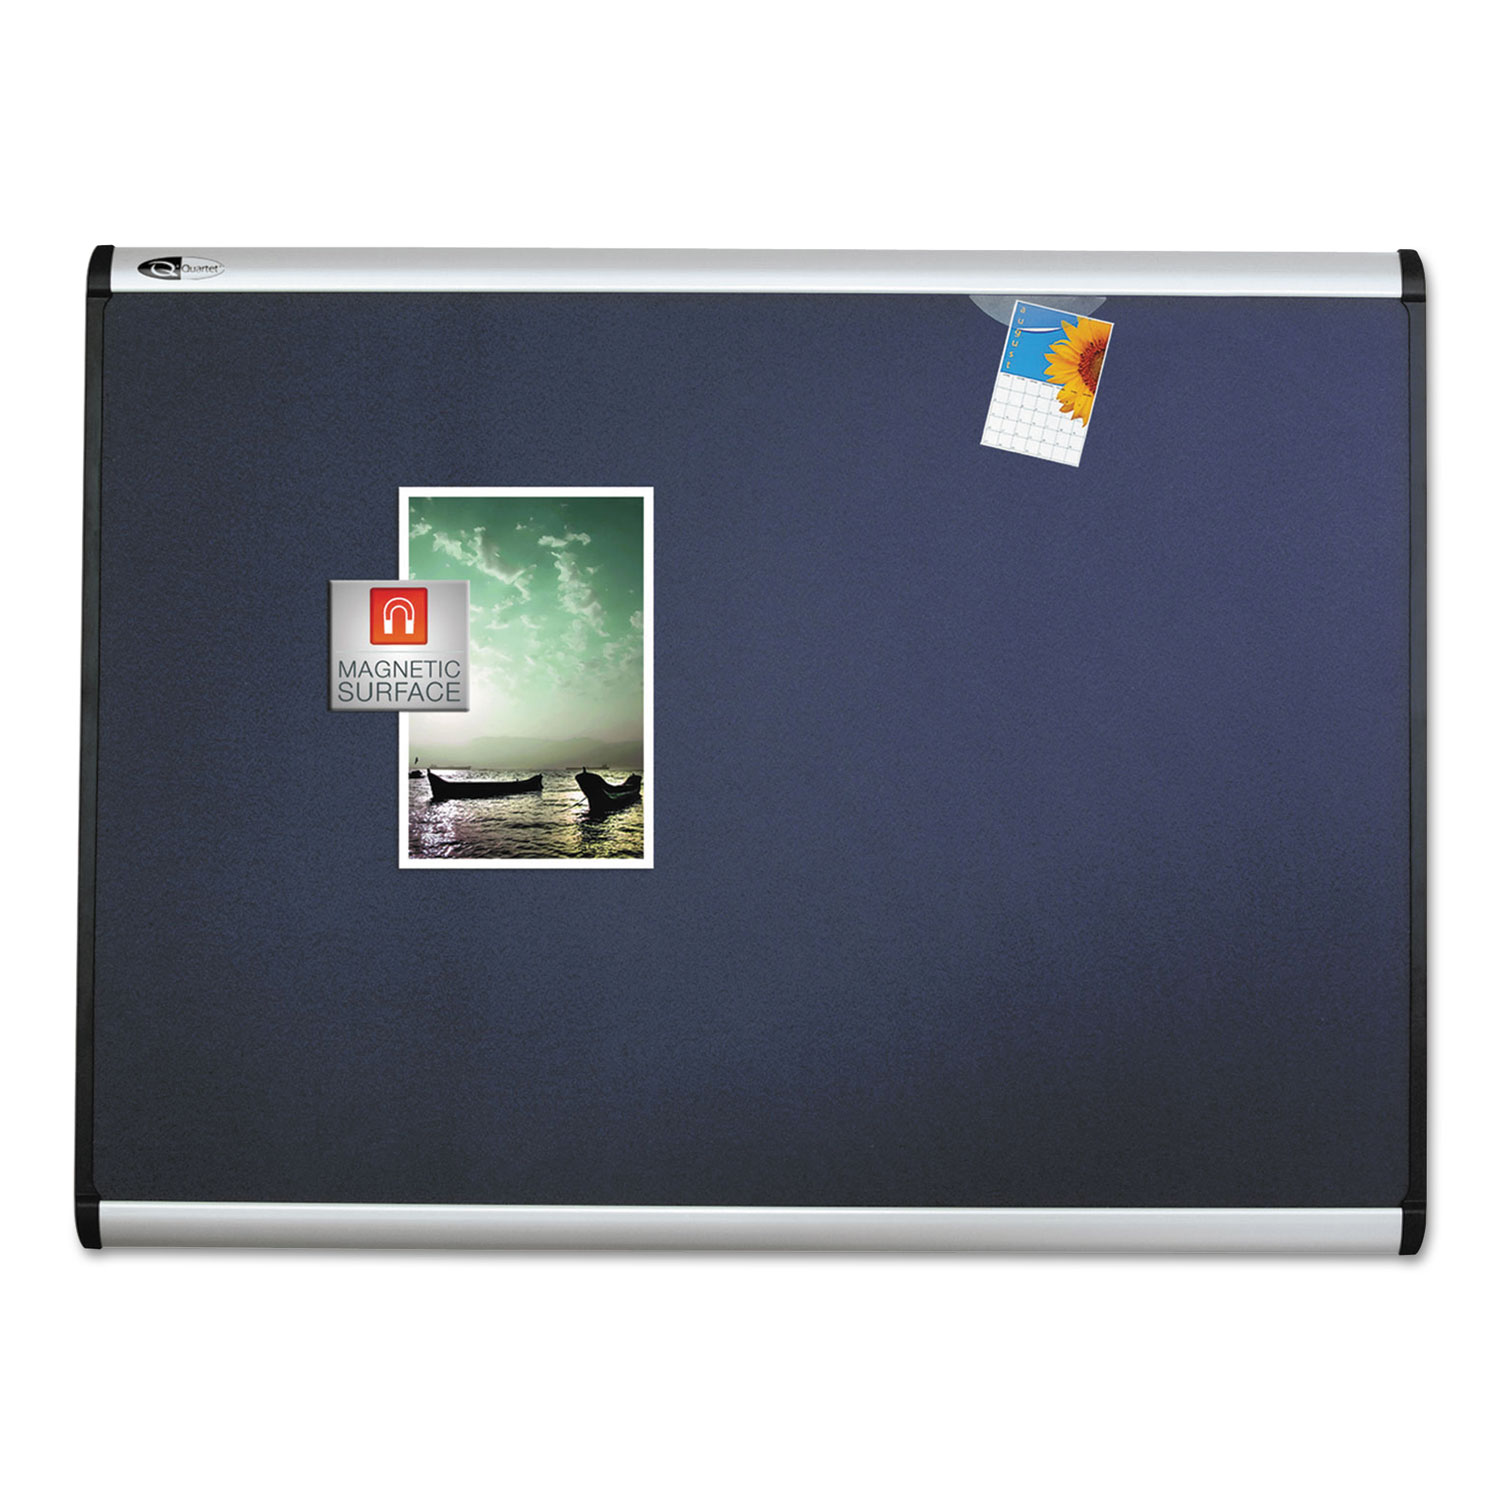 Prestige Plus Magnetic Fabric Bulletin Board, 48 x 36, Aluminum Frame